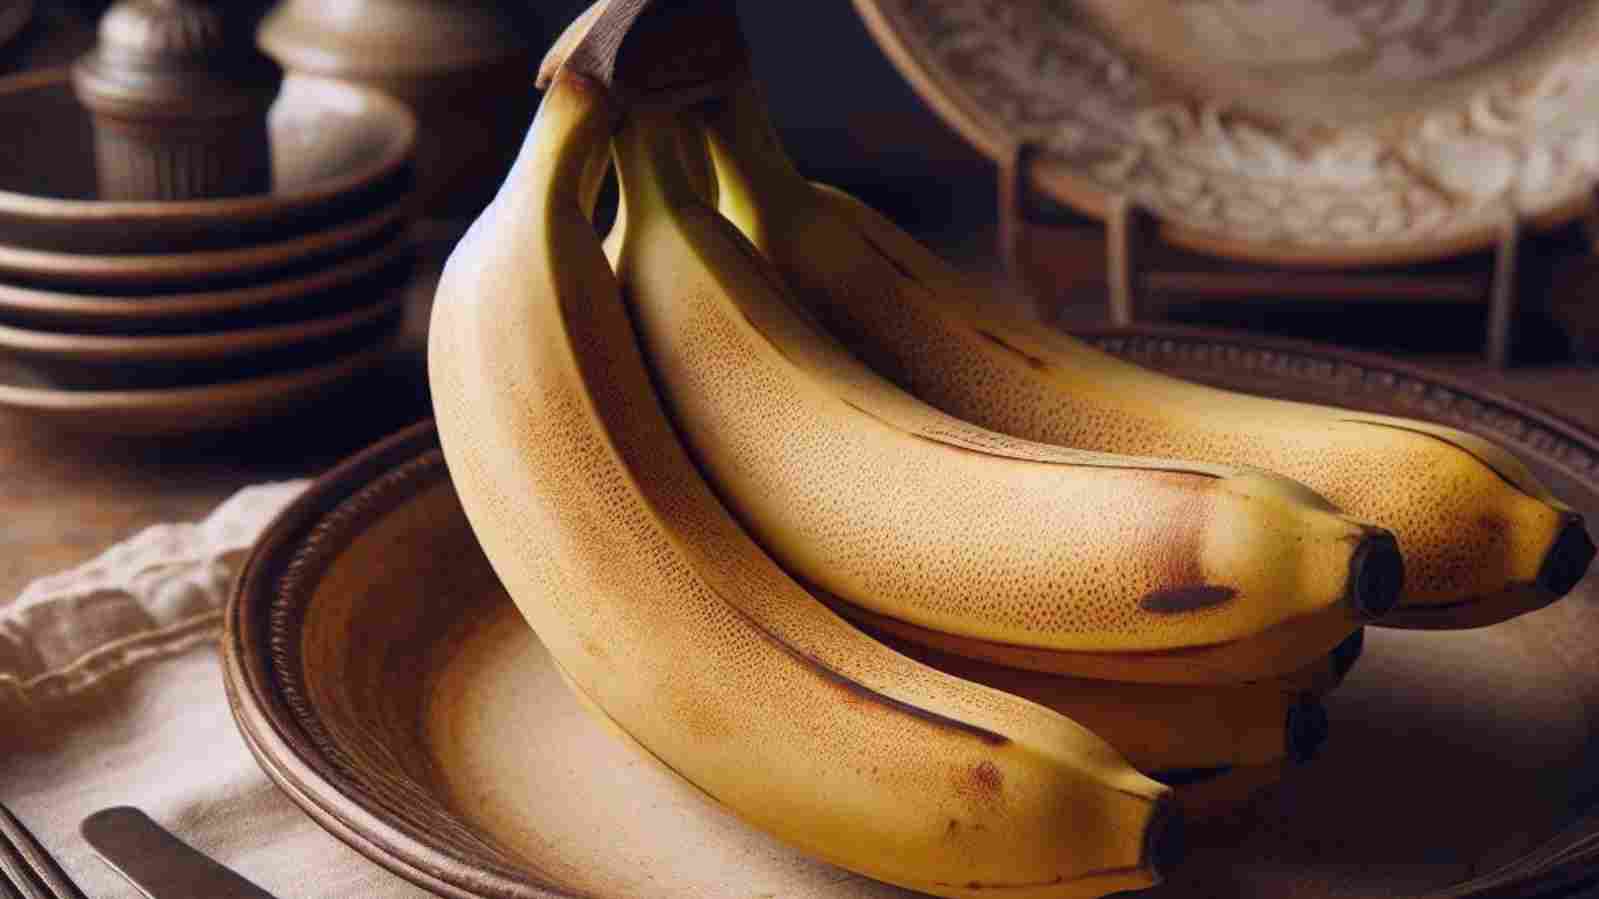 Spiritual Meaning of Smelling Bananas